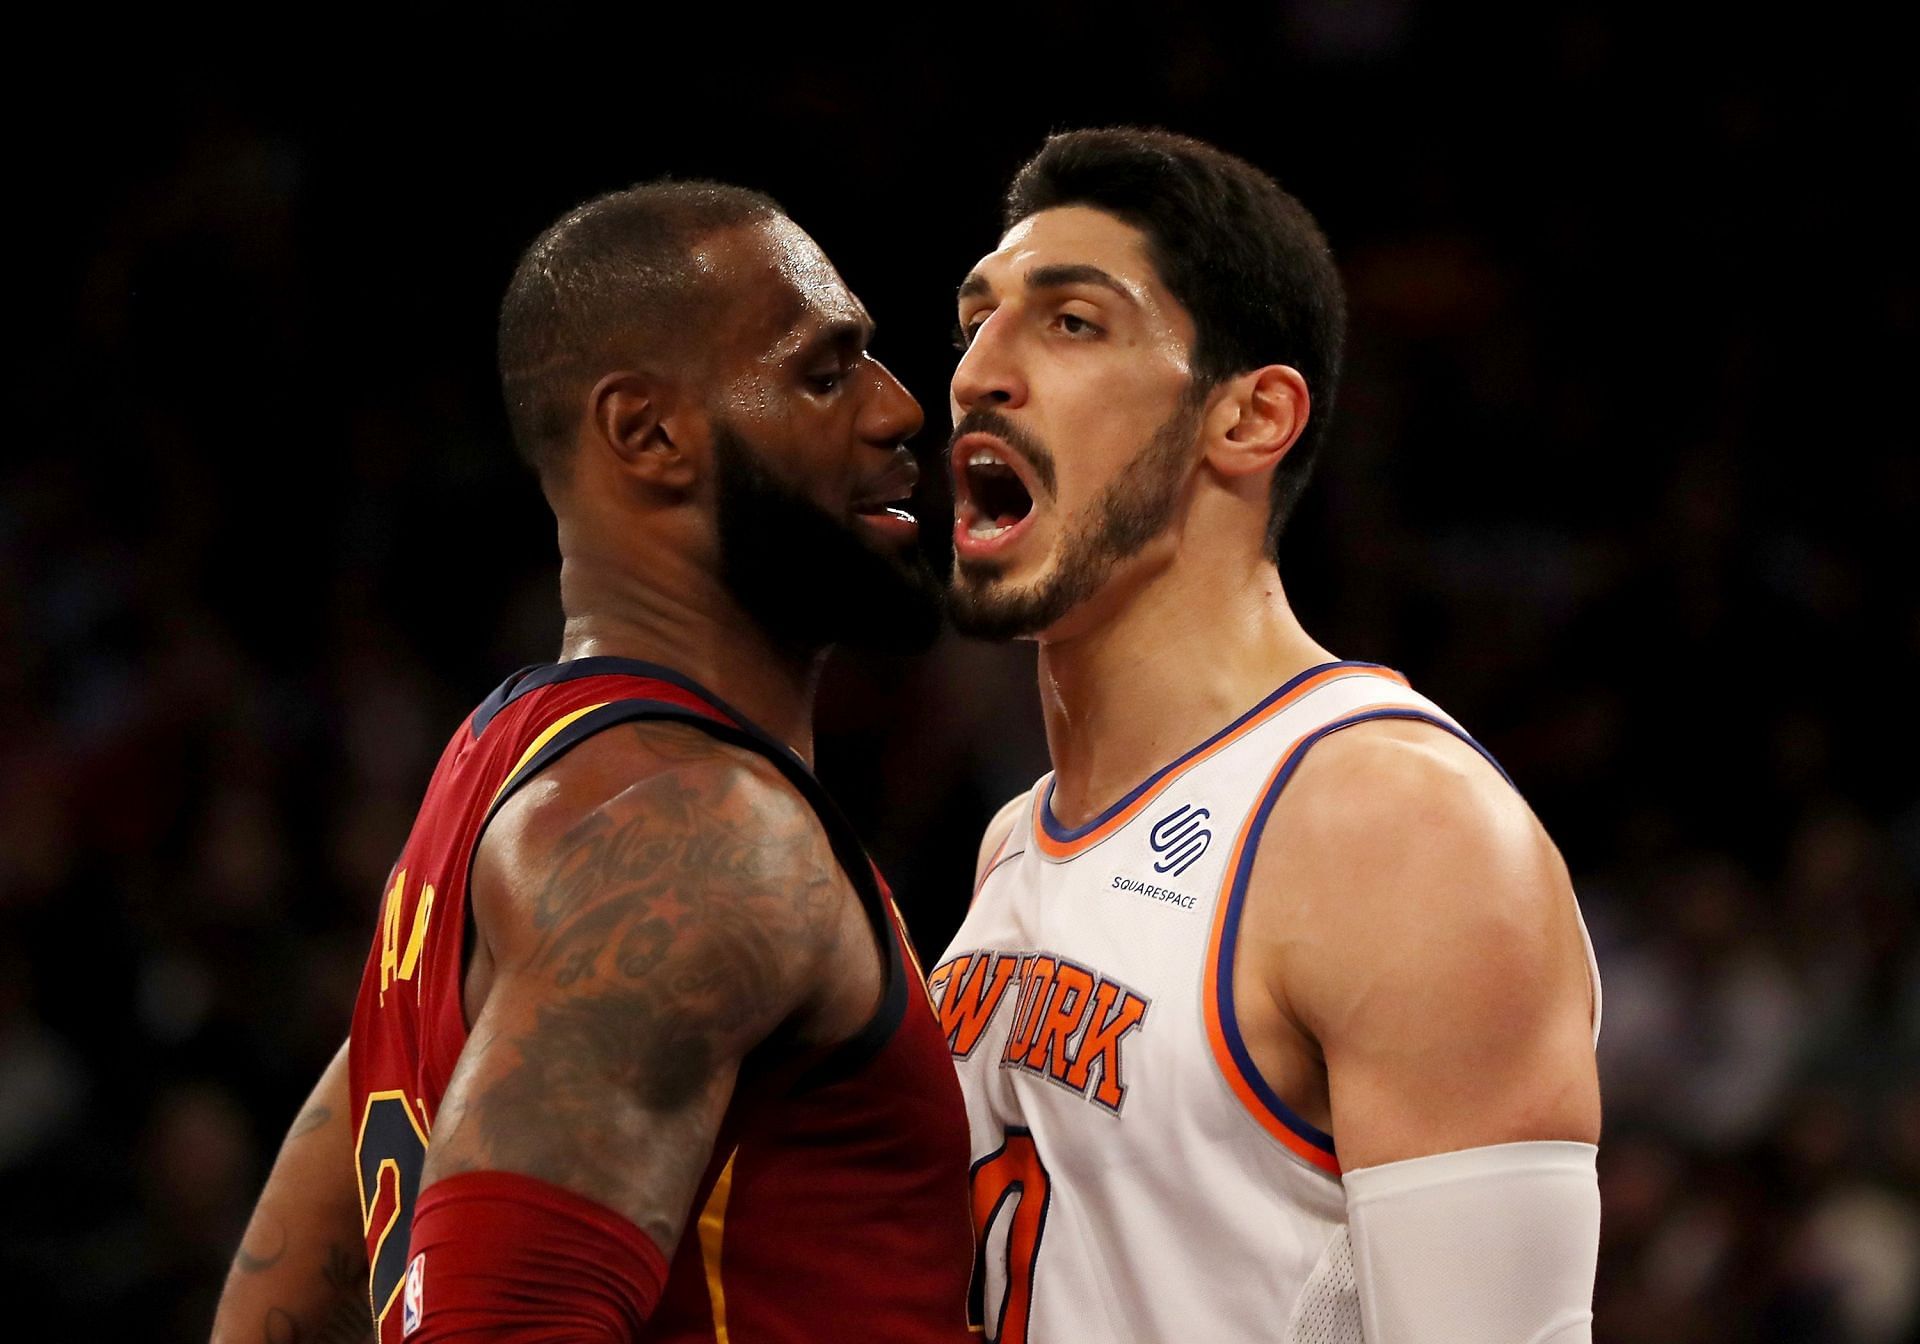 Cleveland Cavaliers vs New York Knicks